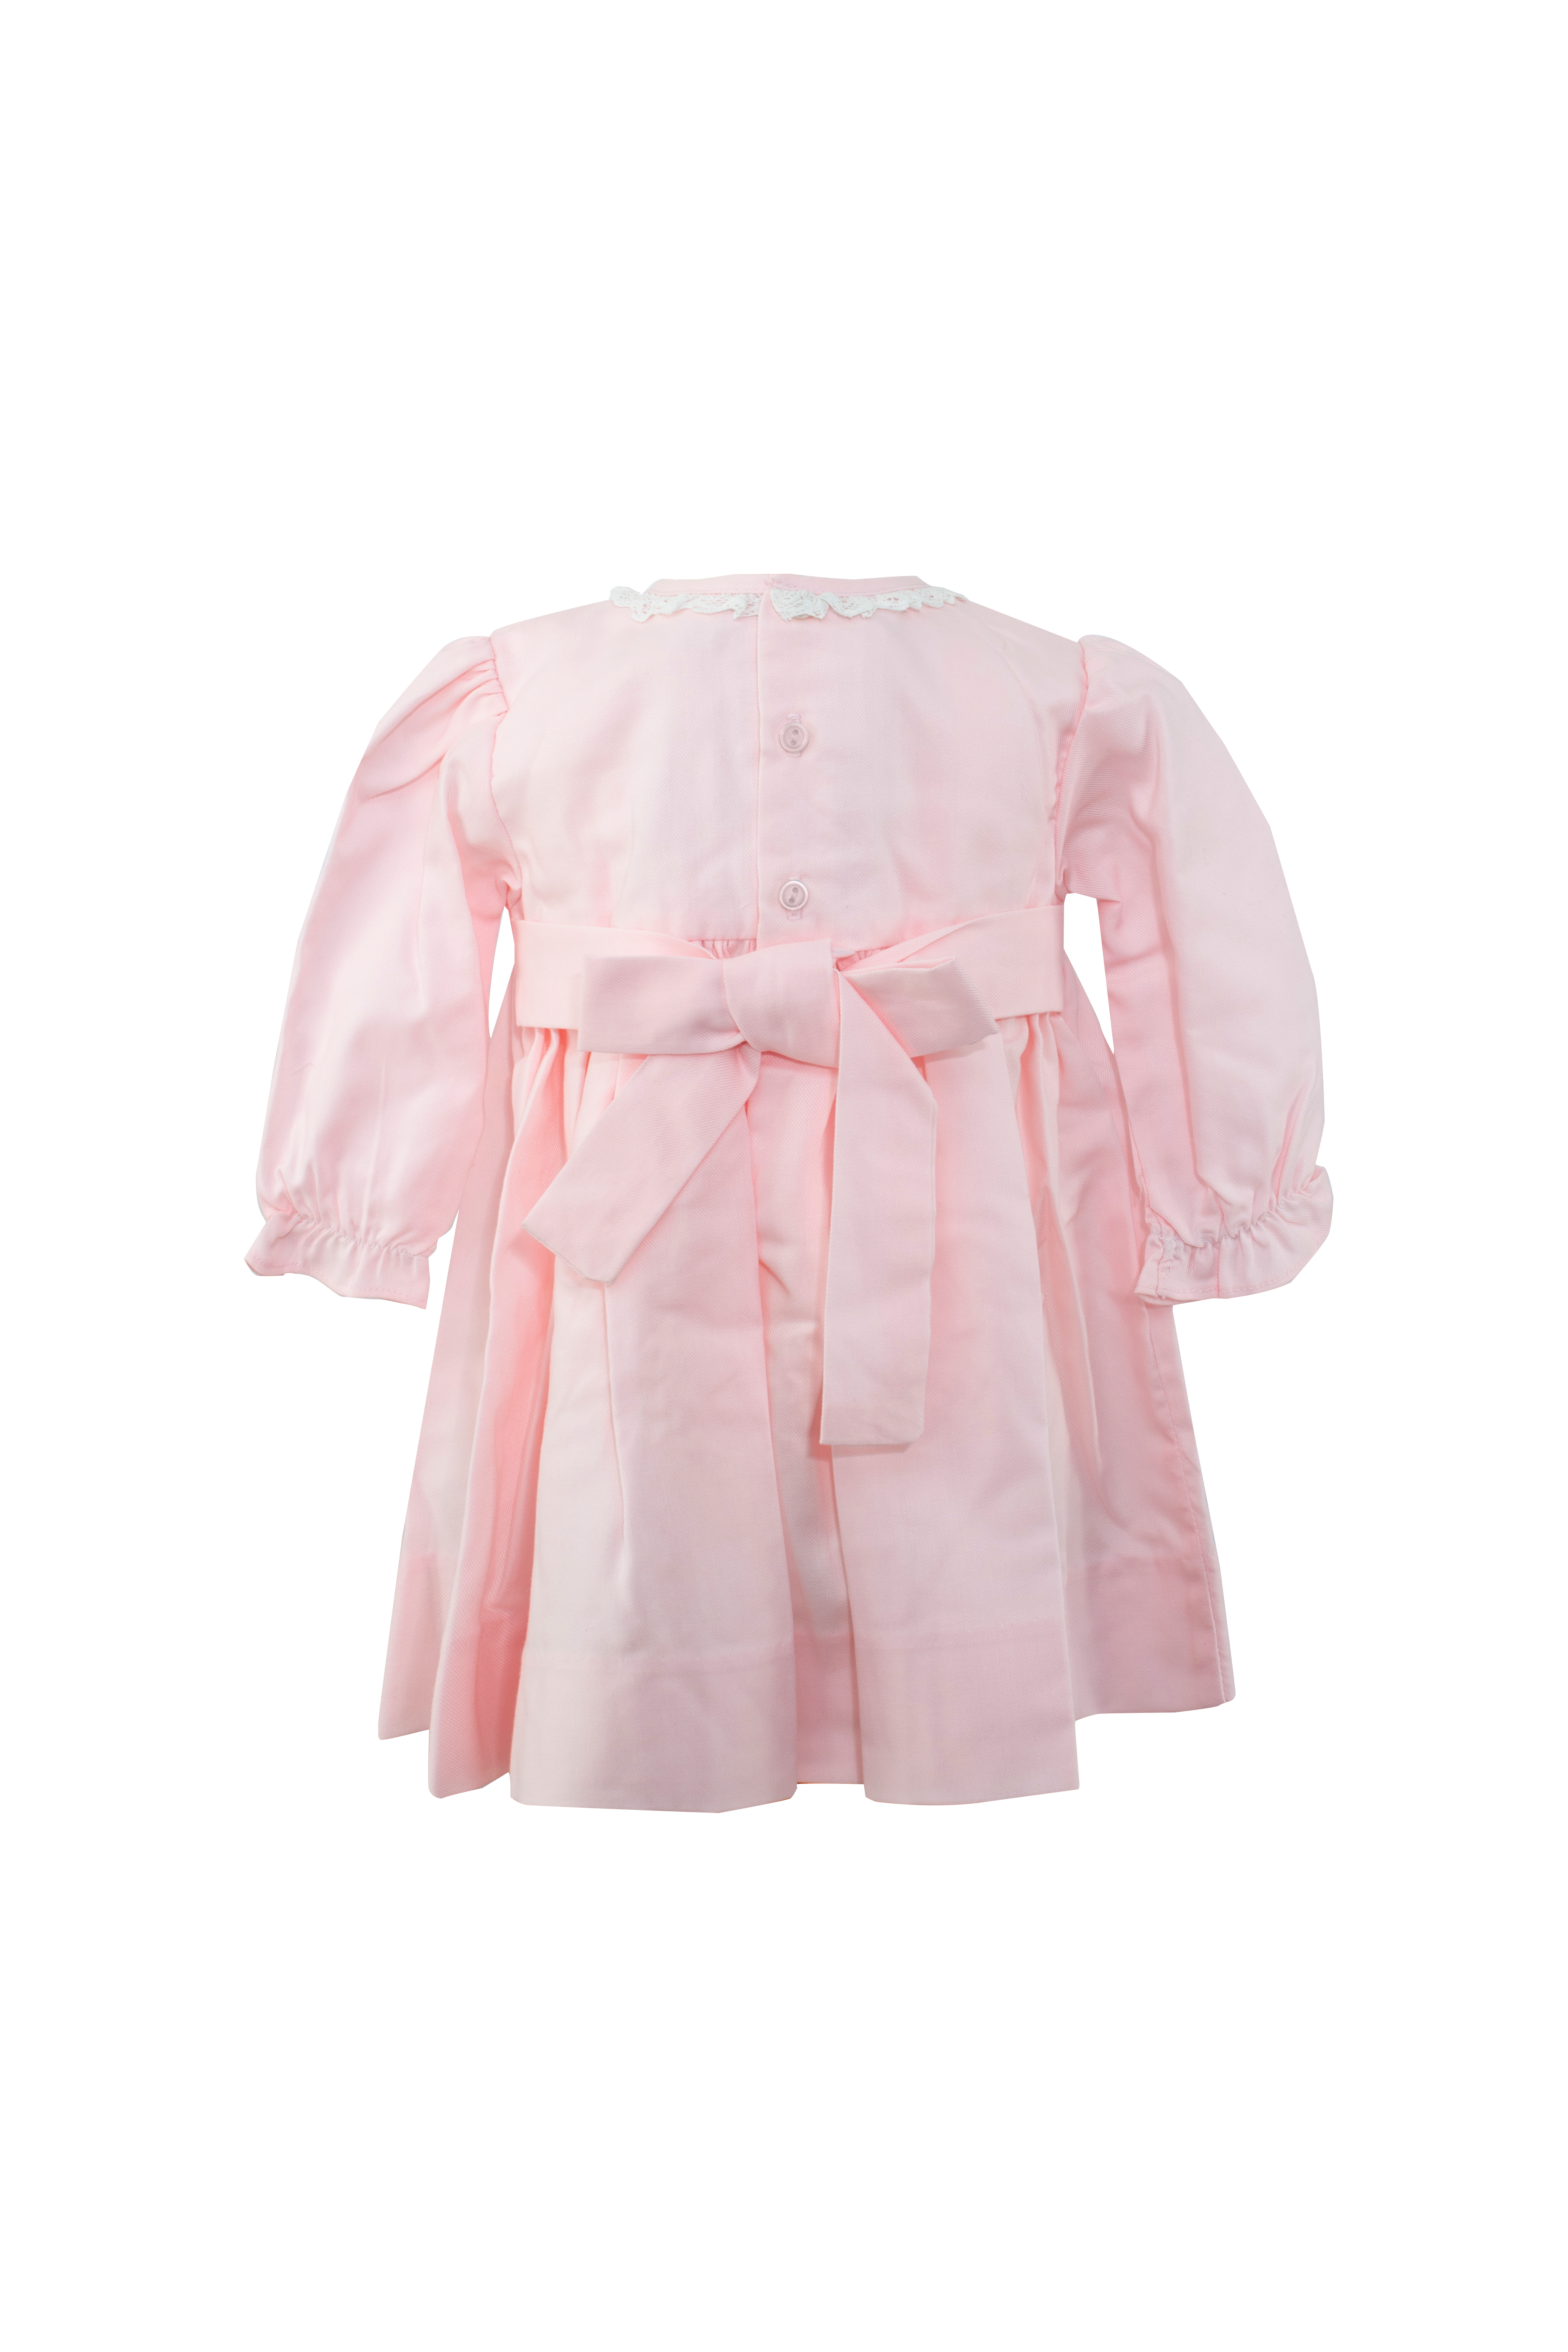 31047-Light Pink Baby Girl Long Sleeve Dress